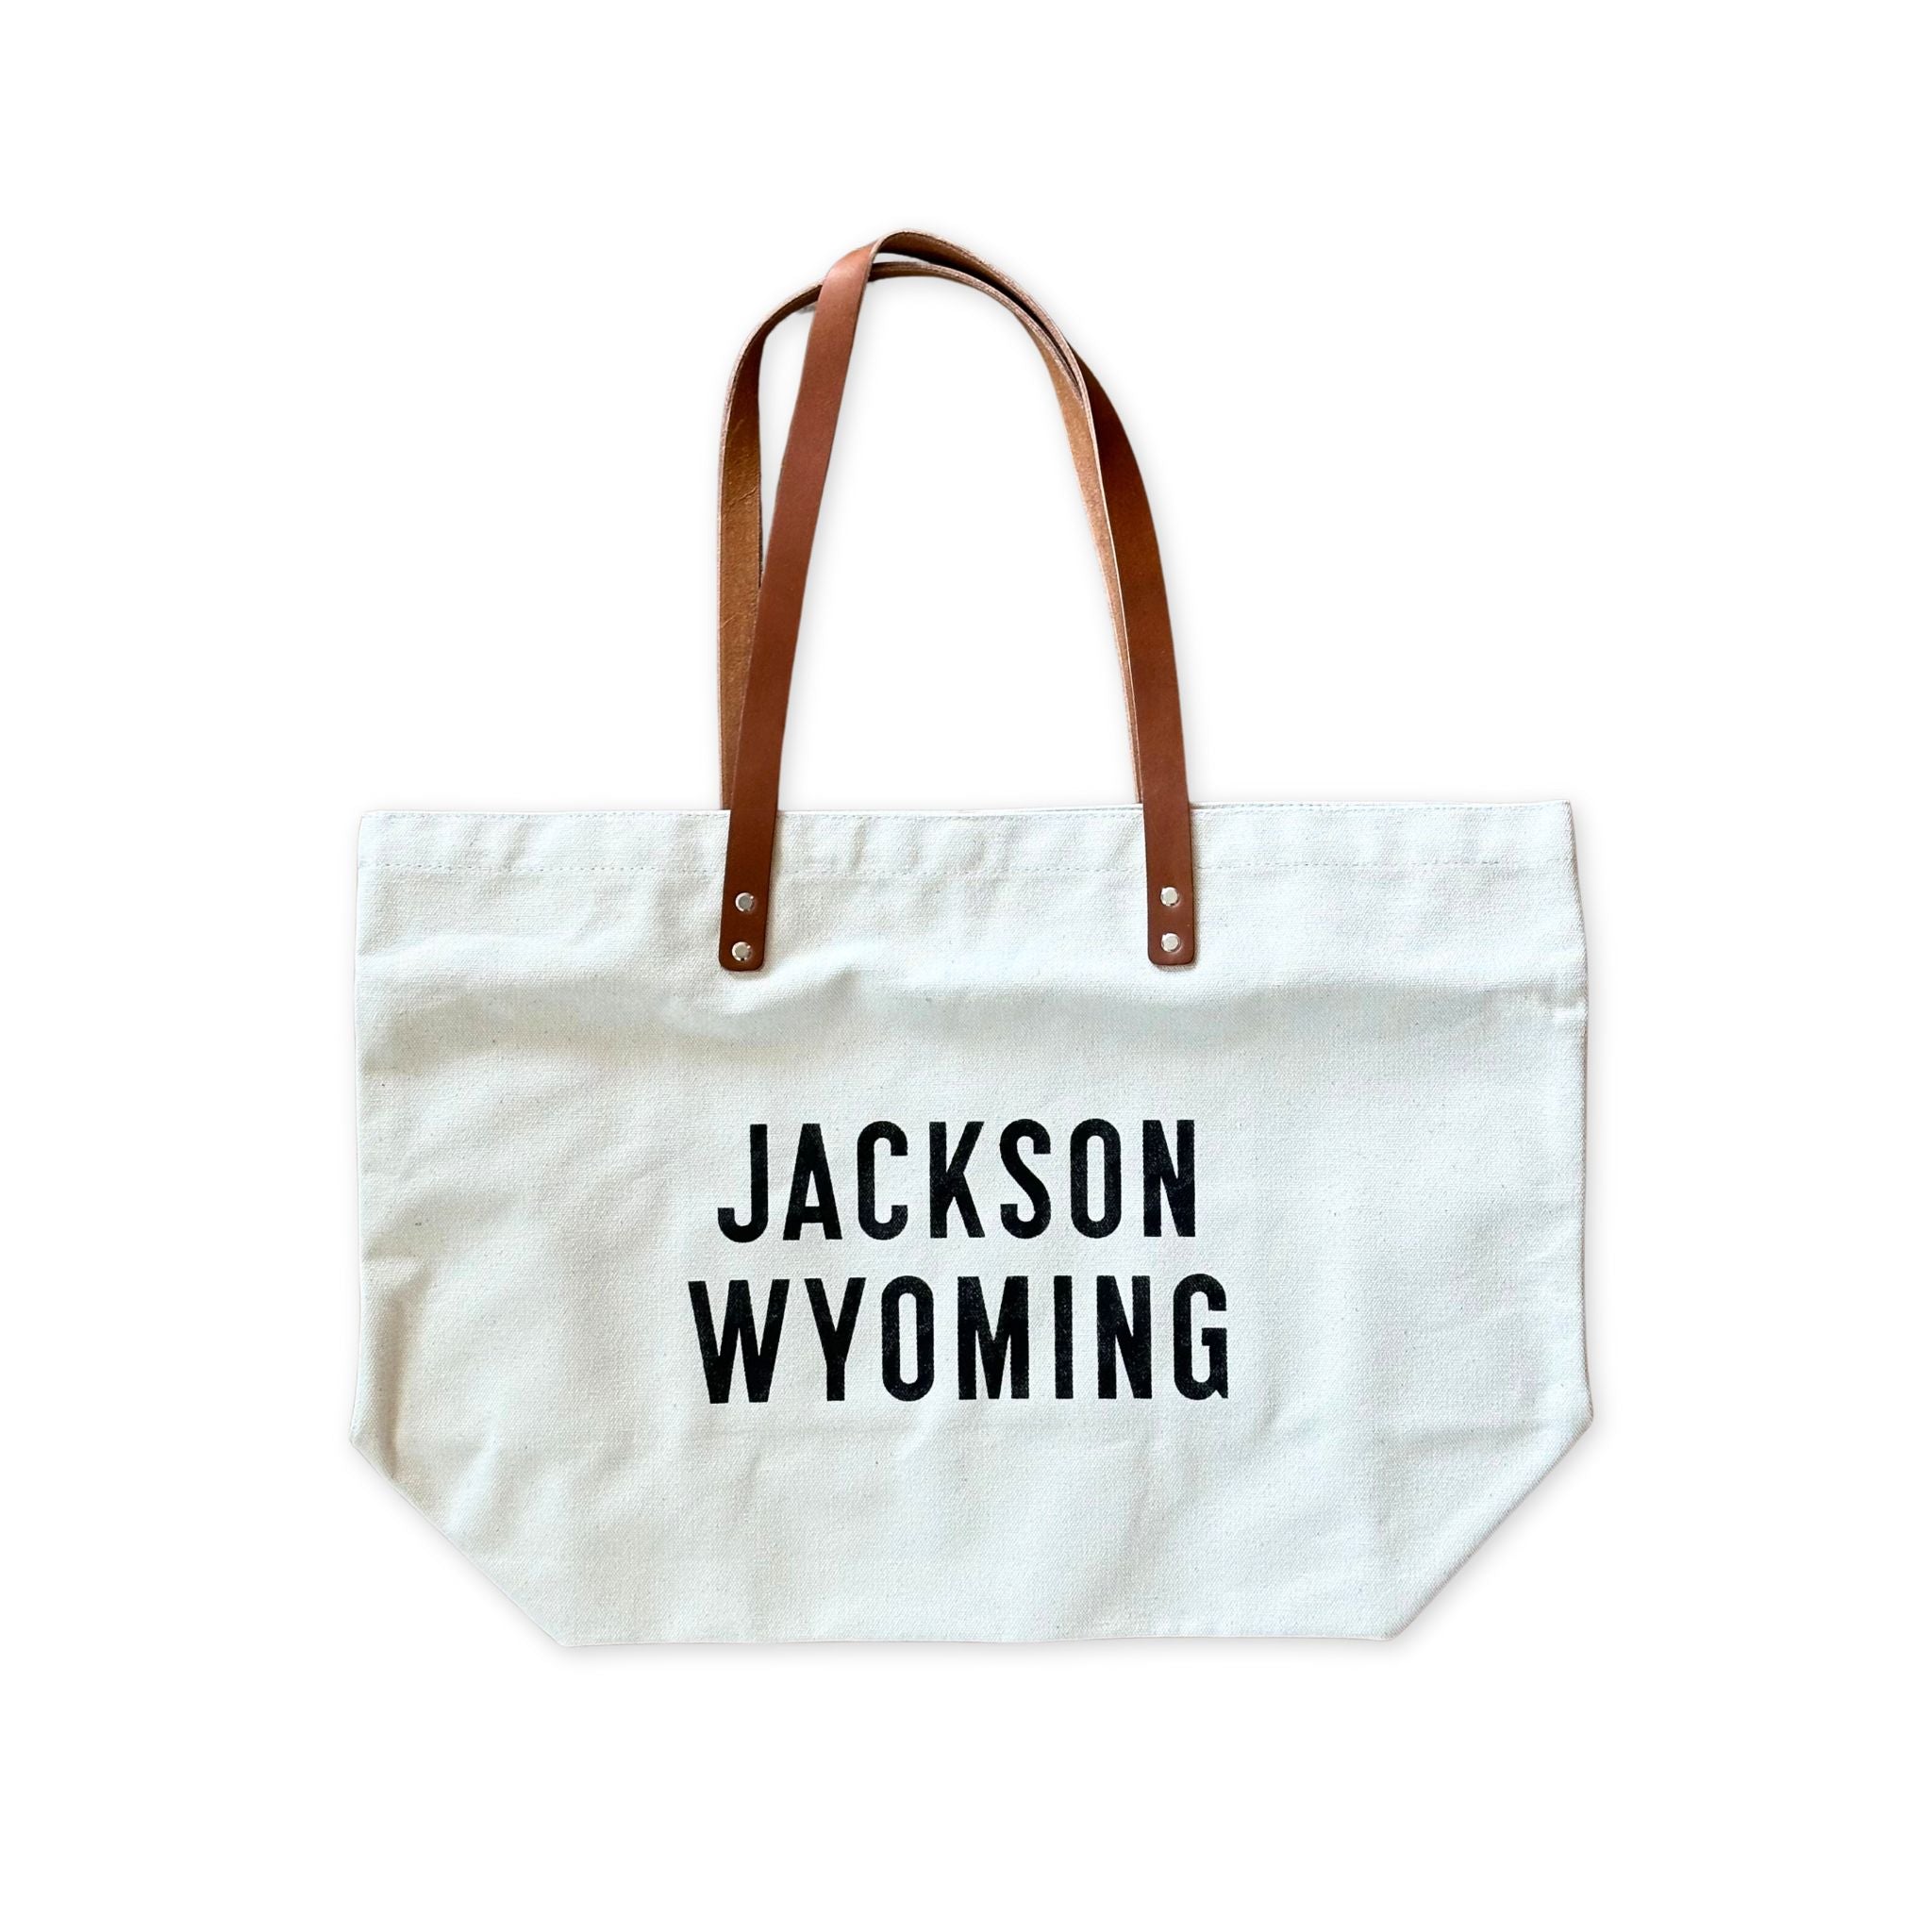 Jackson, Wyoming Tote